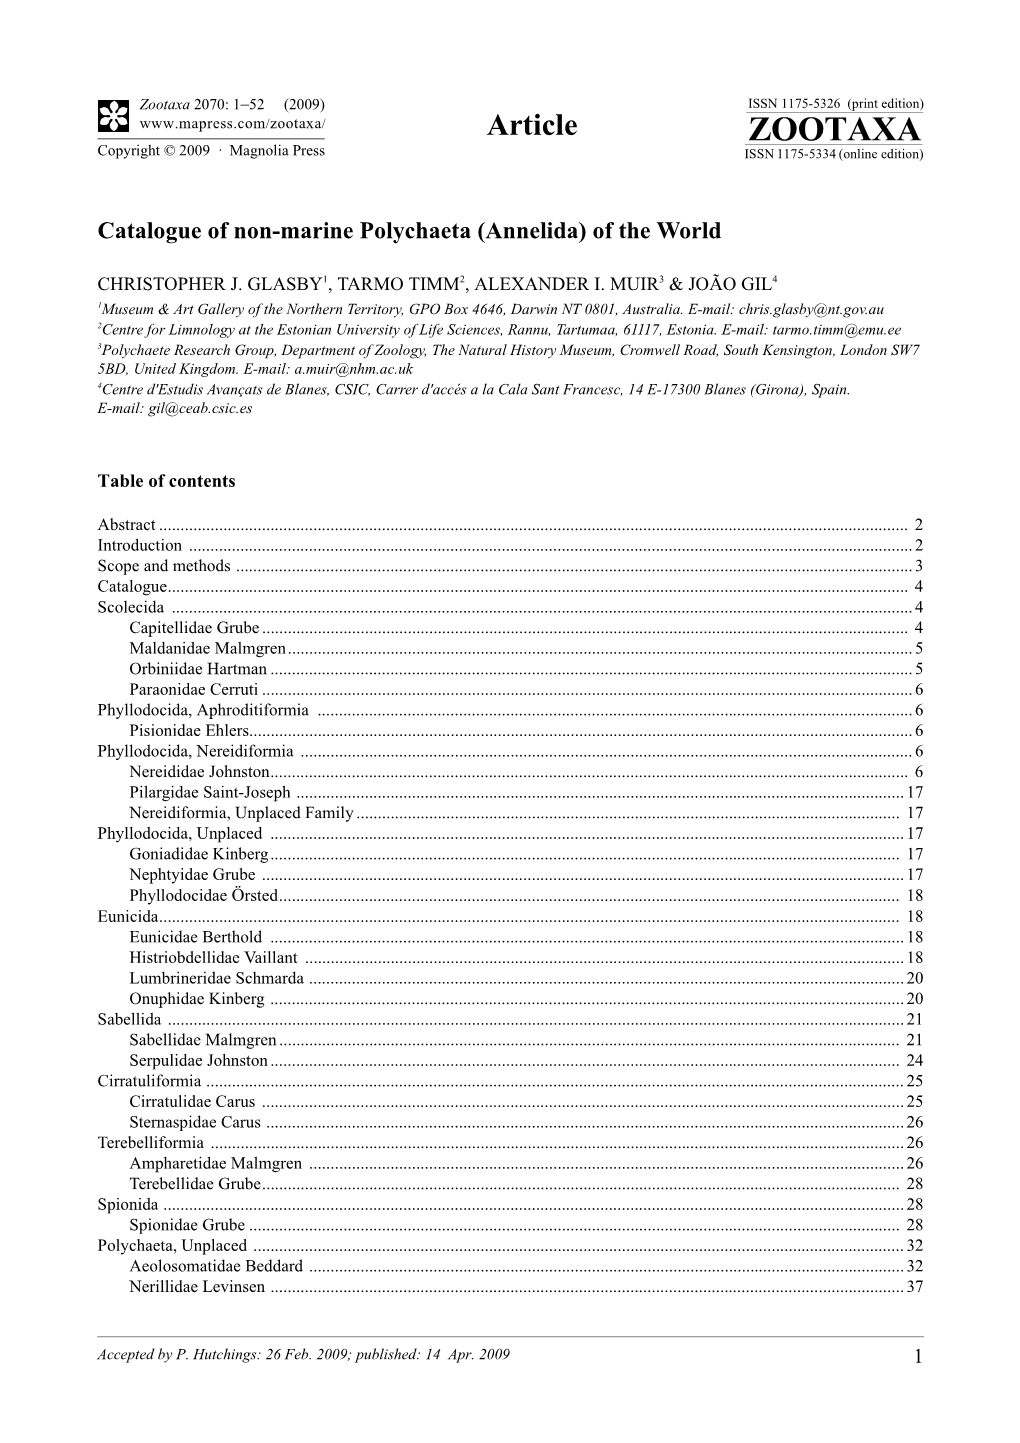 Zootaxa, Catalogue of Non-Marine Polychaeta (Annelida)